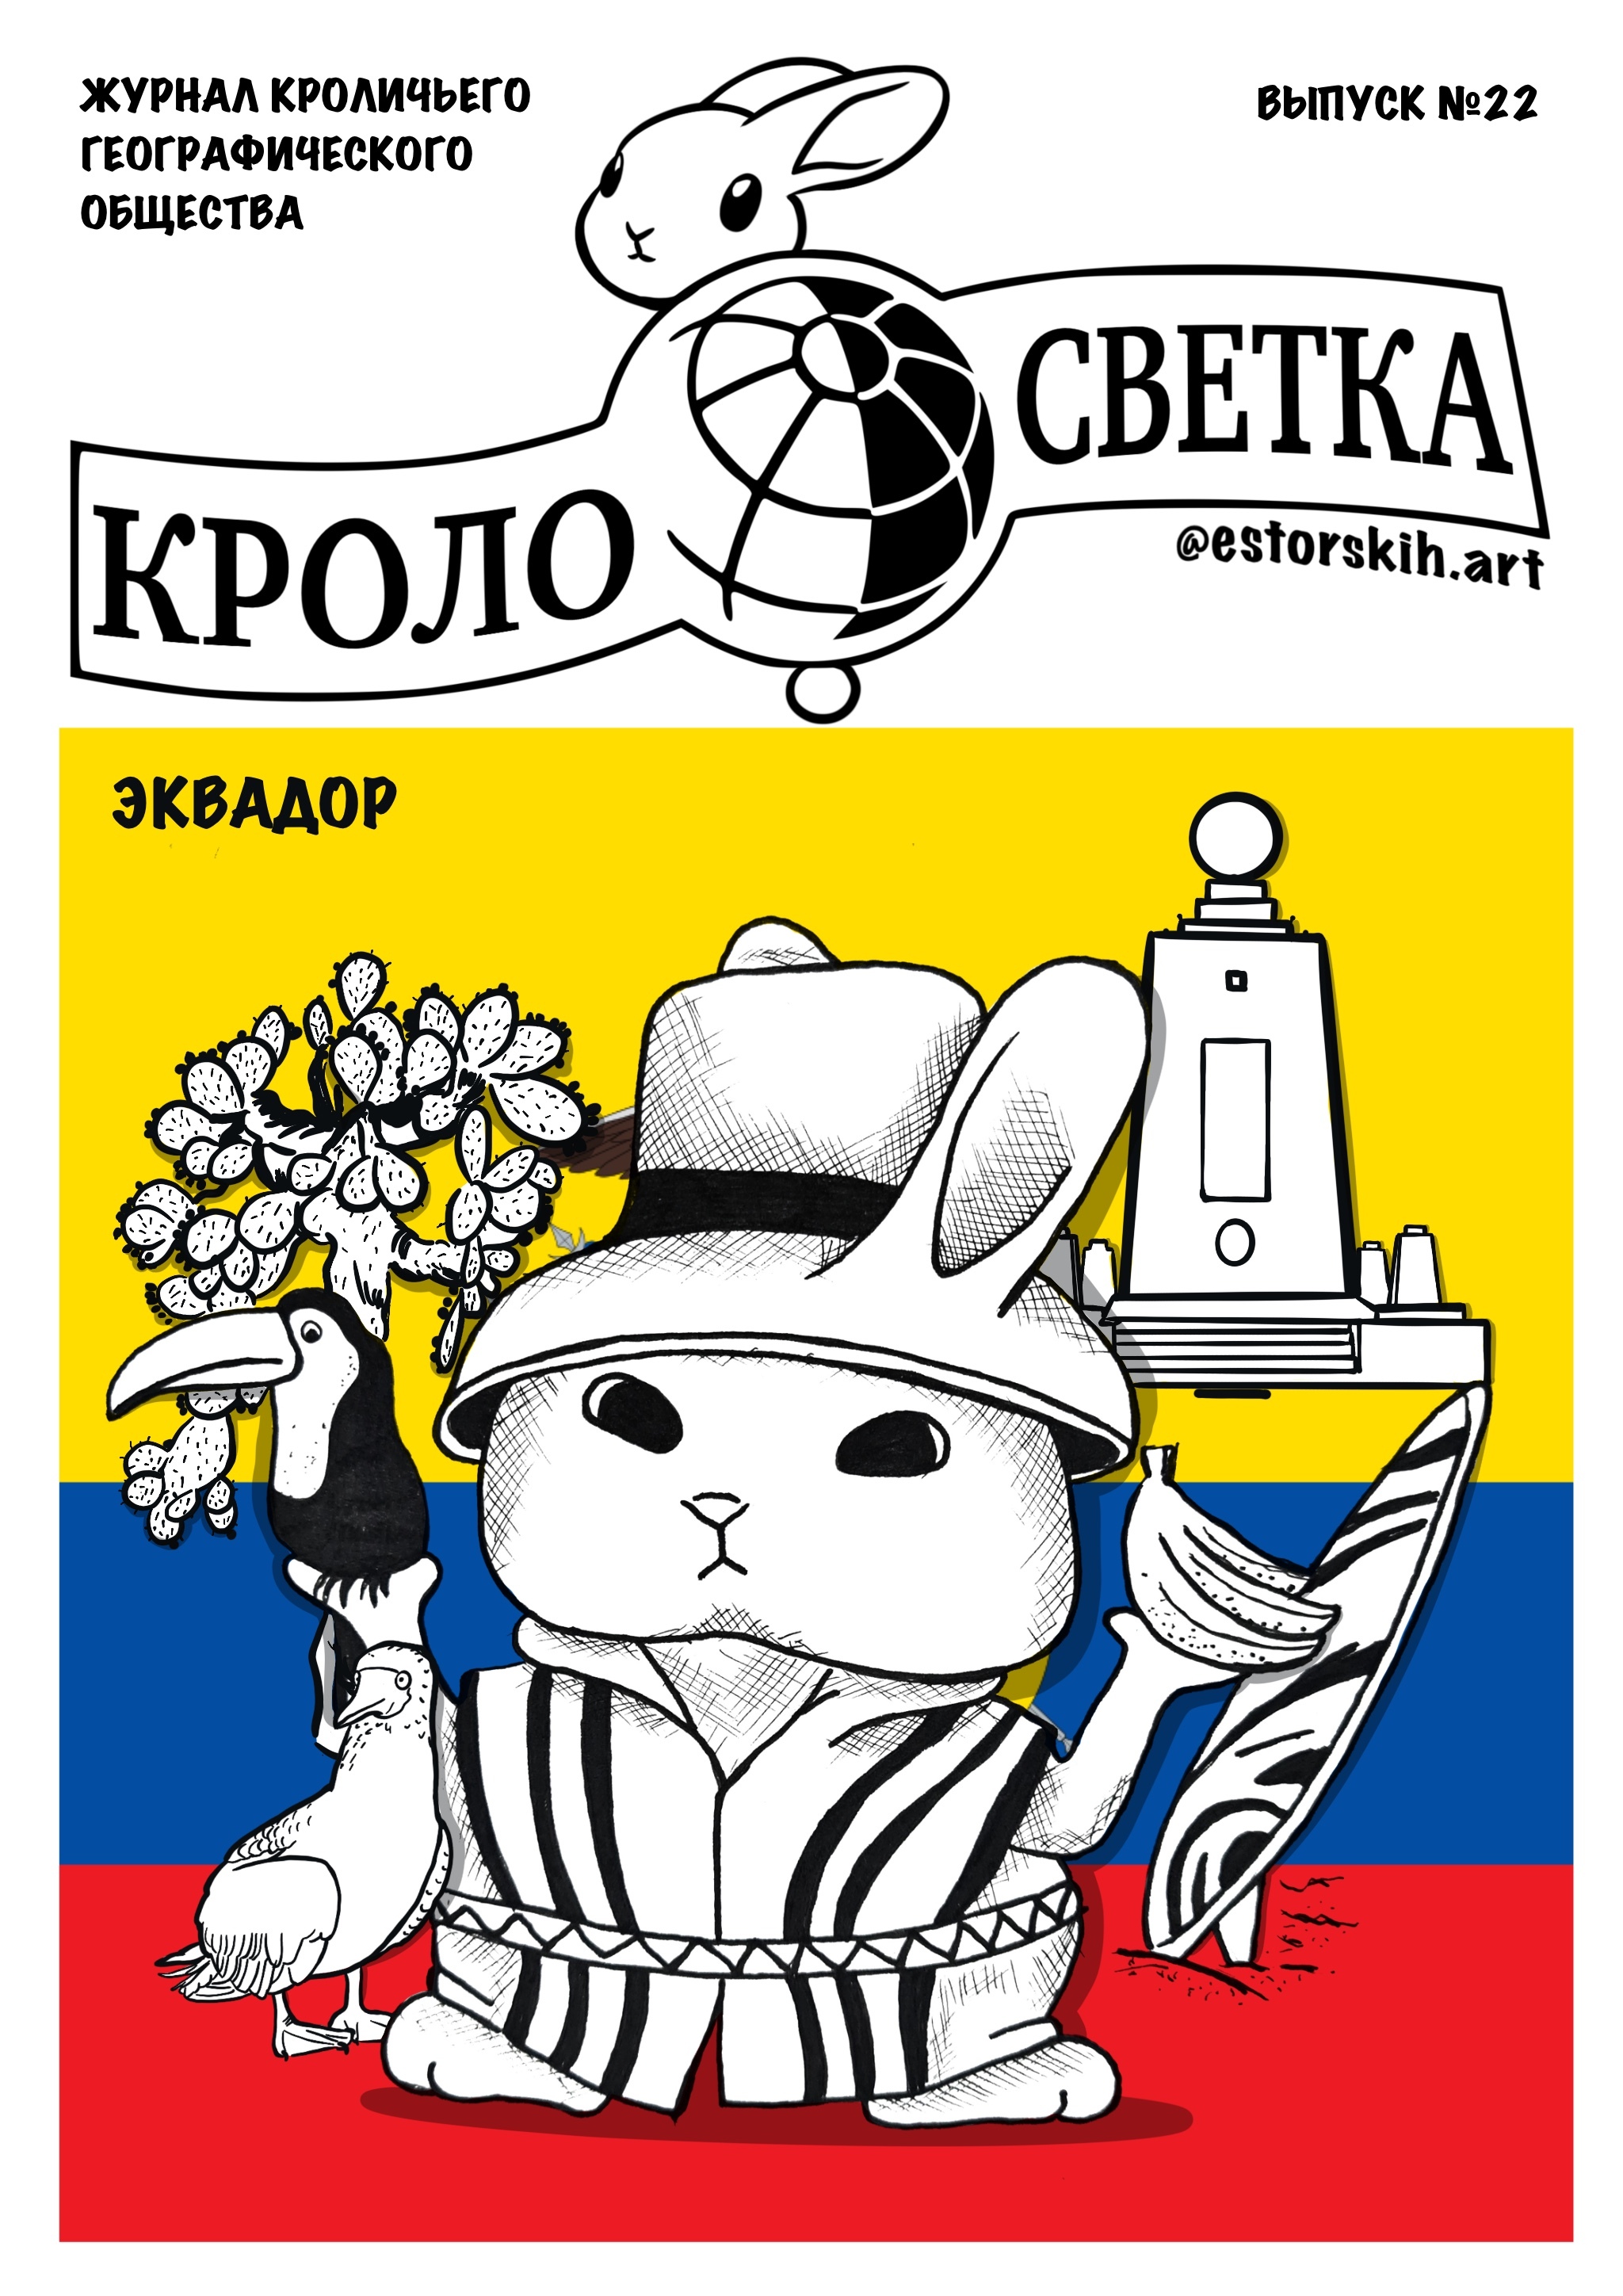 Rabbit Summer in Ecuador - My, Rabbit, Summer, Ecuador, Travels, Trip around the world, Estorskihart, Sketch, Illustrations, Comments on Peekaboo, Screenshot, Art